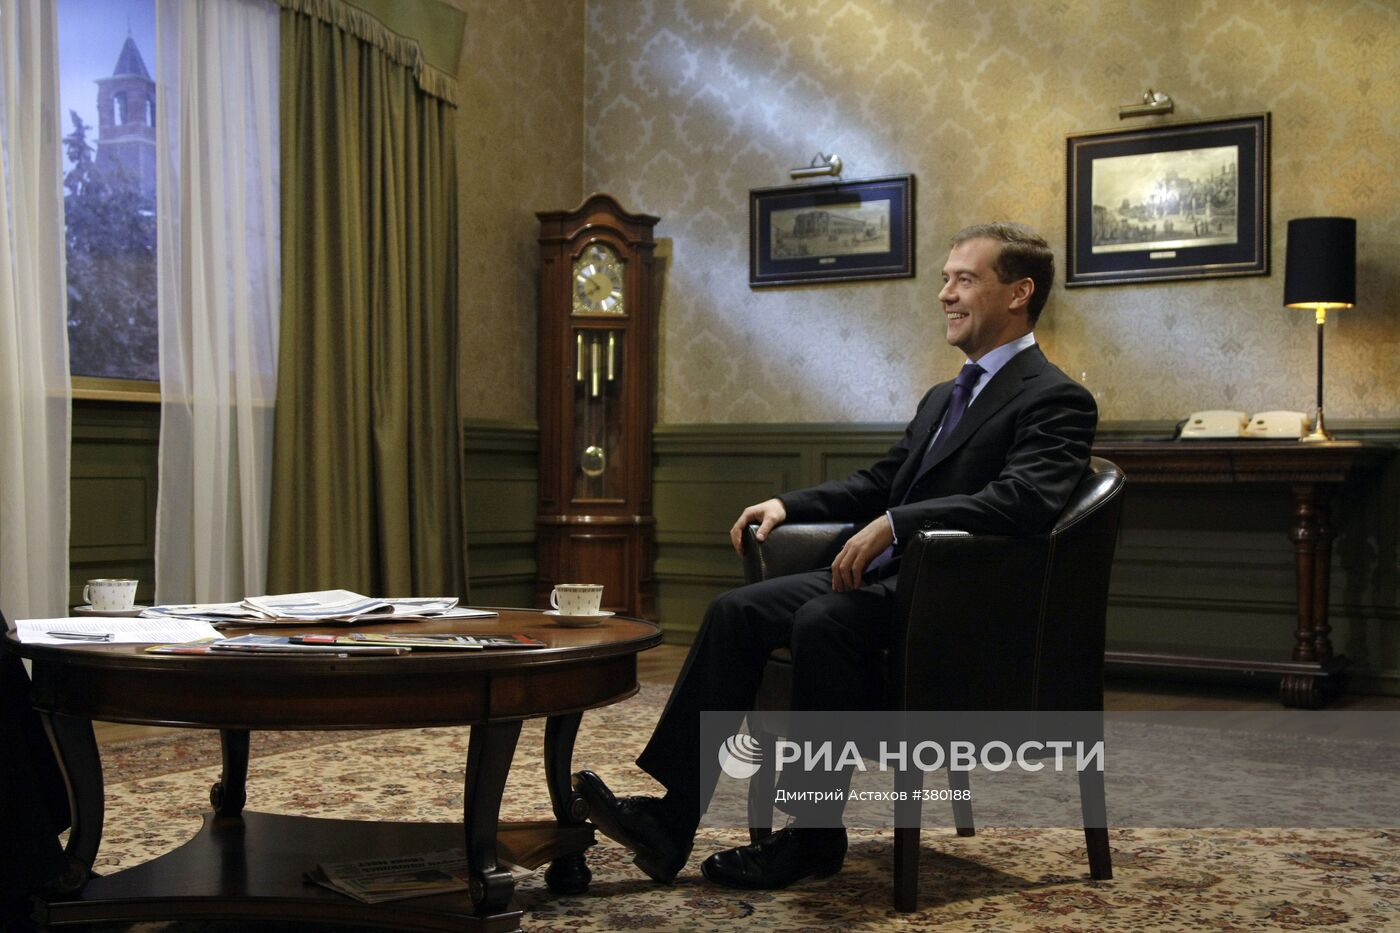 Д.Медведев дал телеинтервью "Первому каналу"